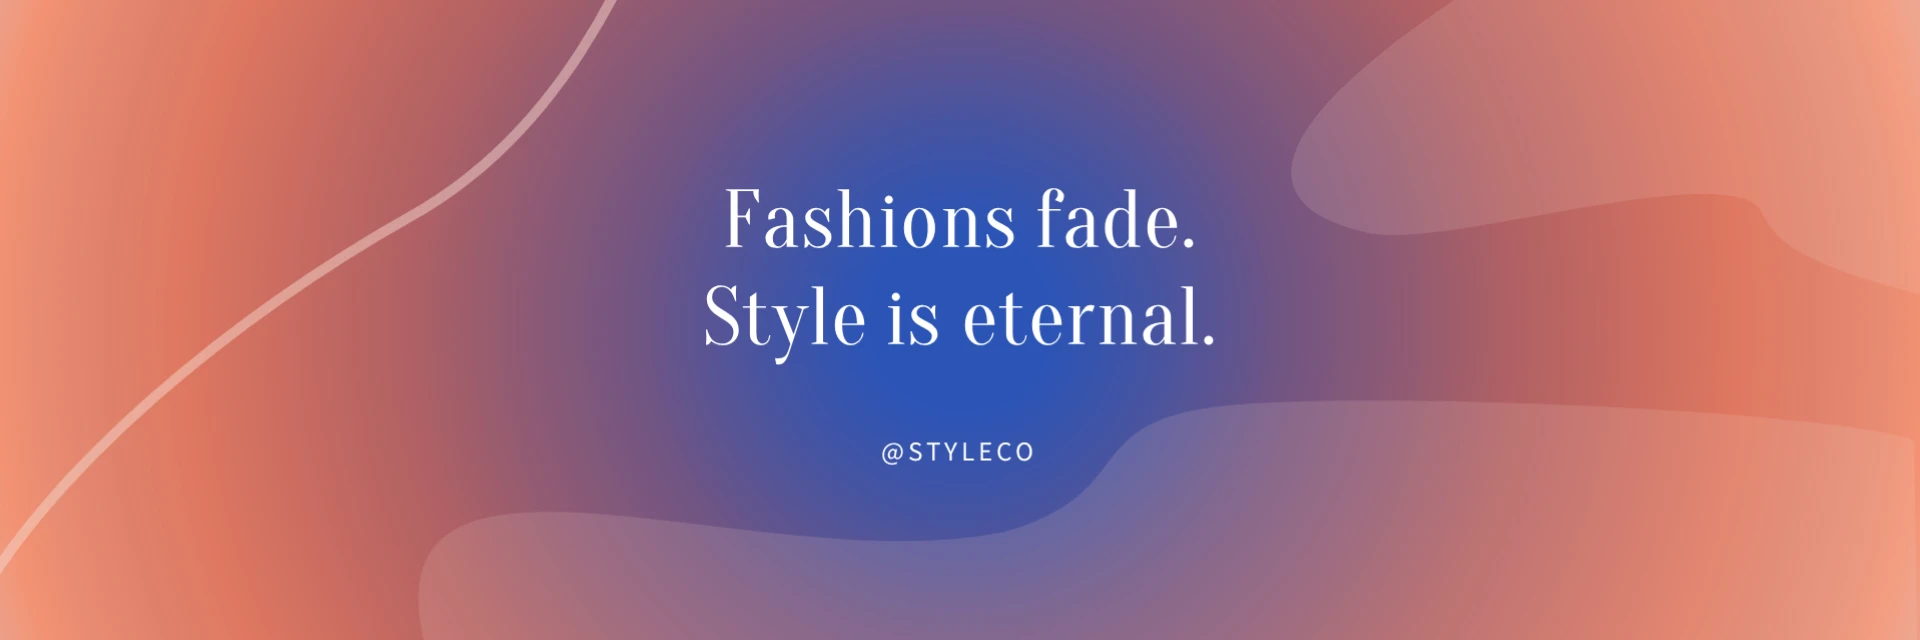 Eternal style